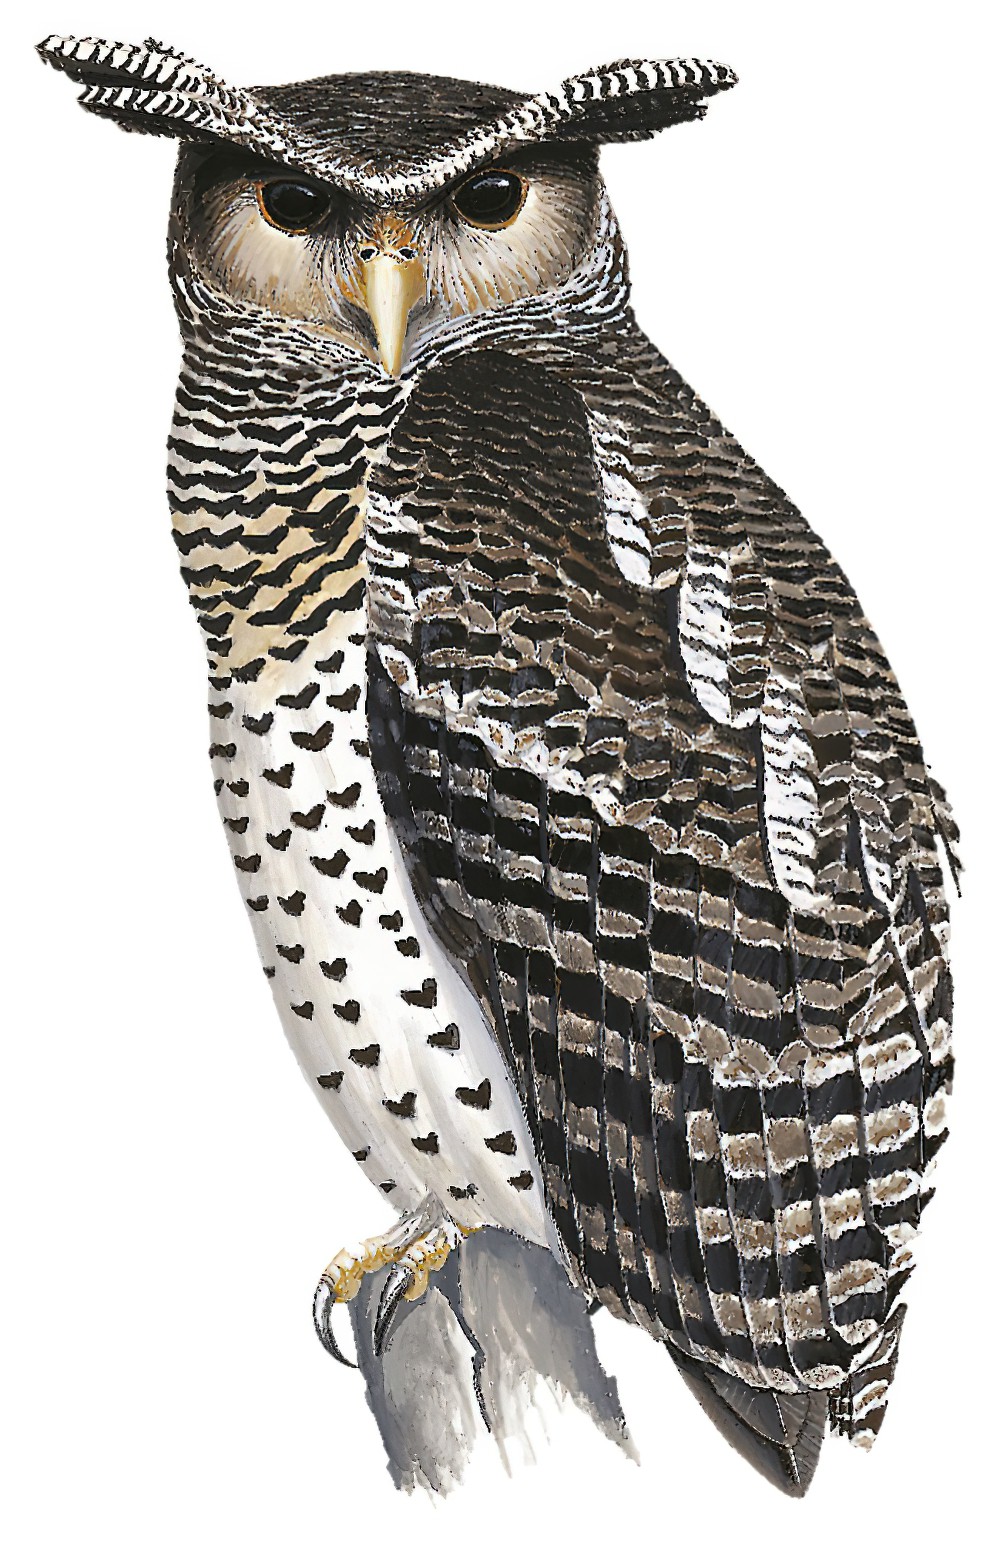 Spot-bellied Eagle-Owl / Bubo nipalensis